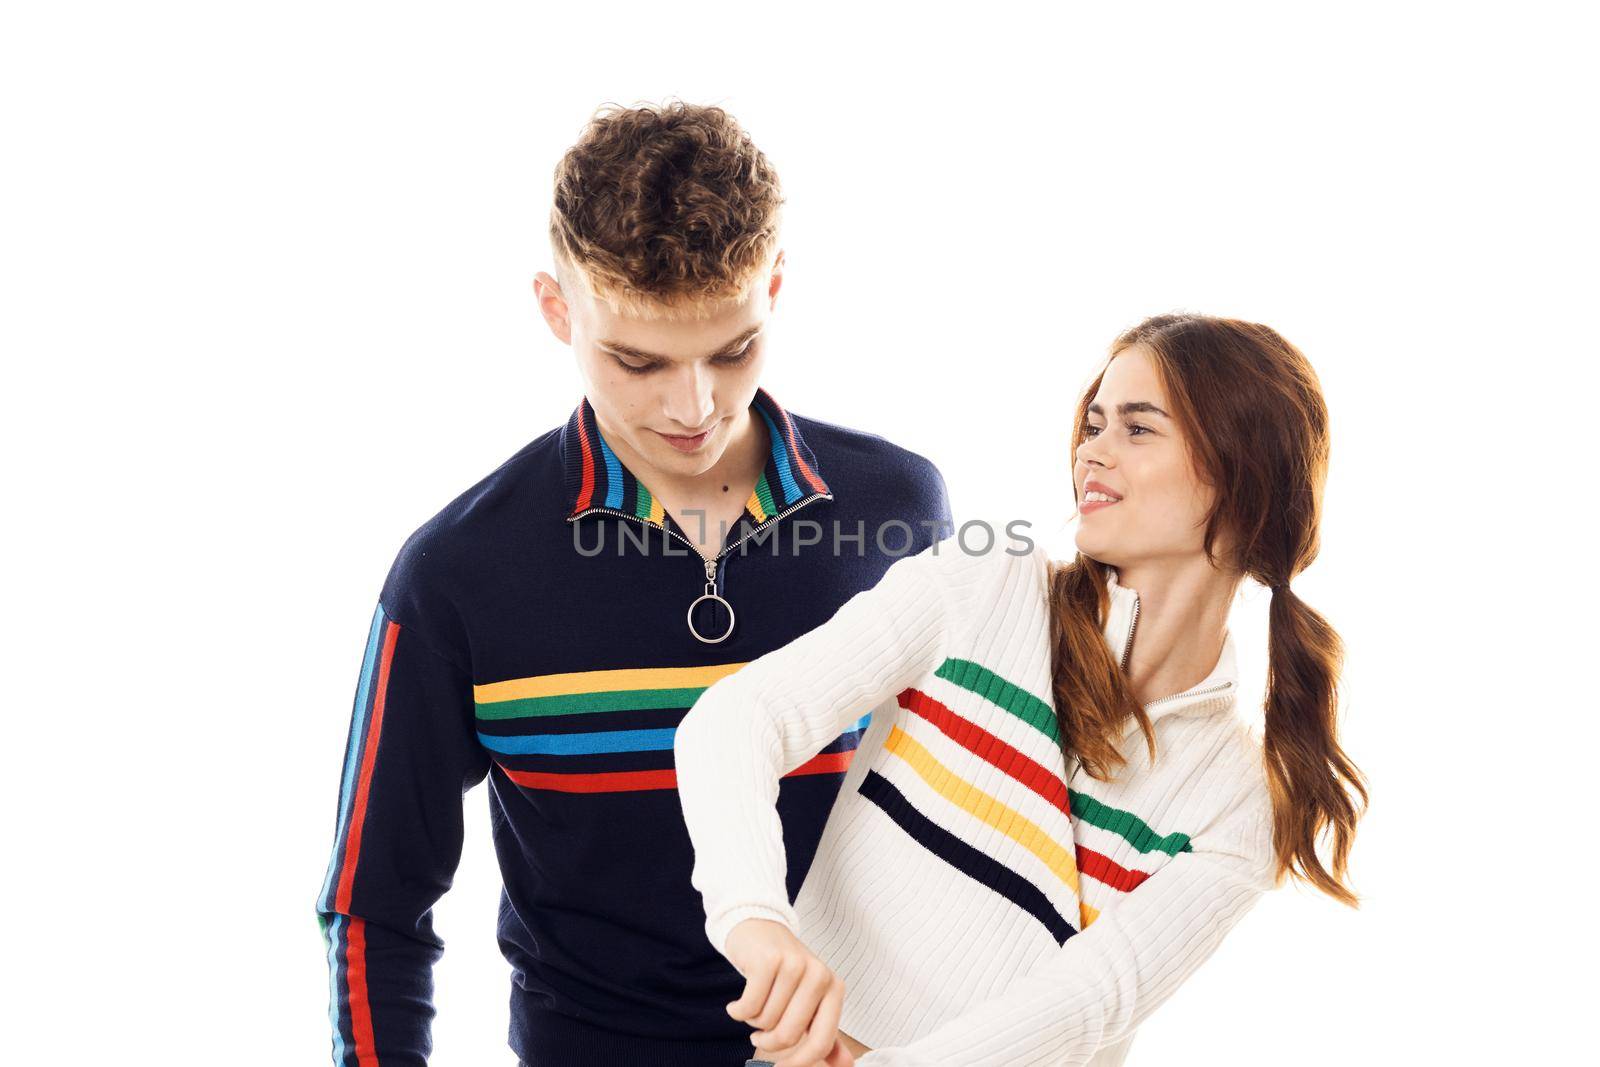 fashion lgbt couple friendship emotions posing light background. High quality photo